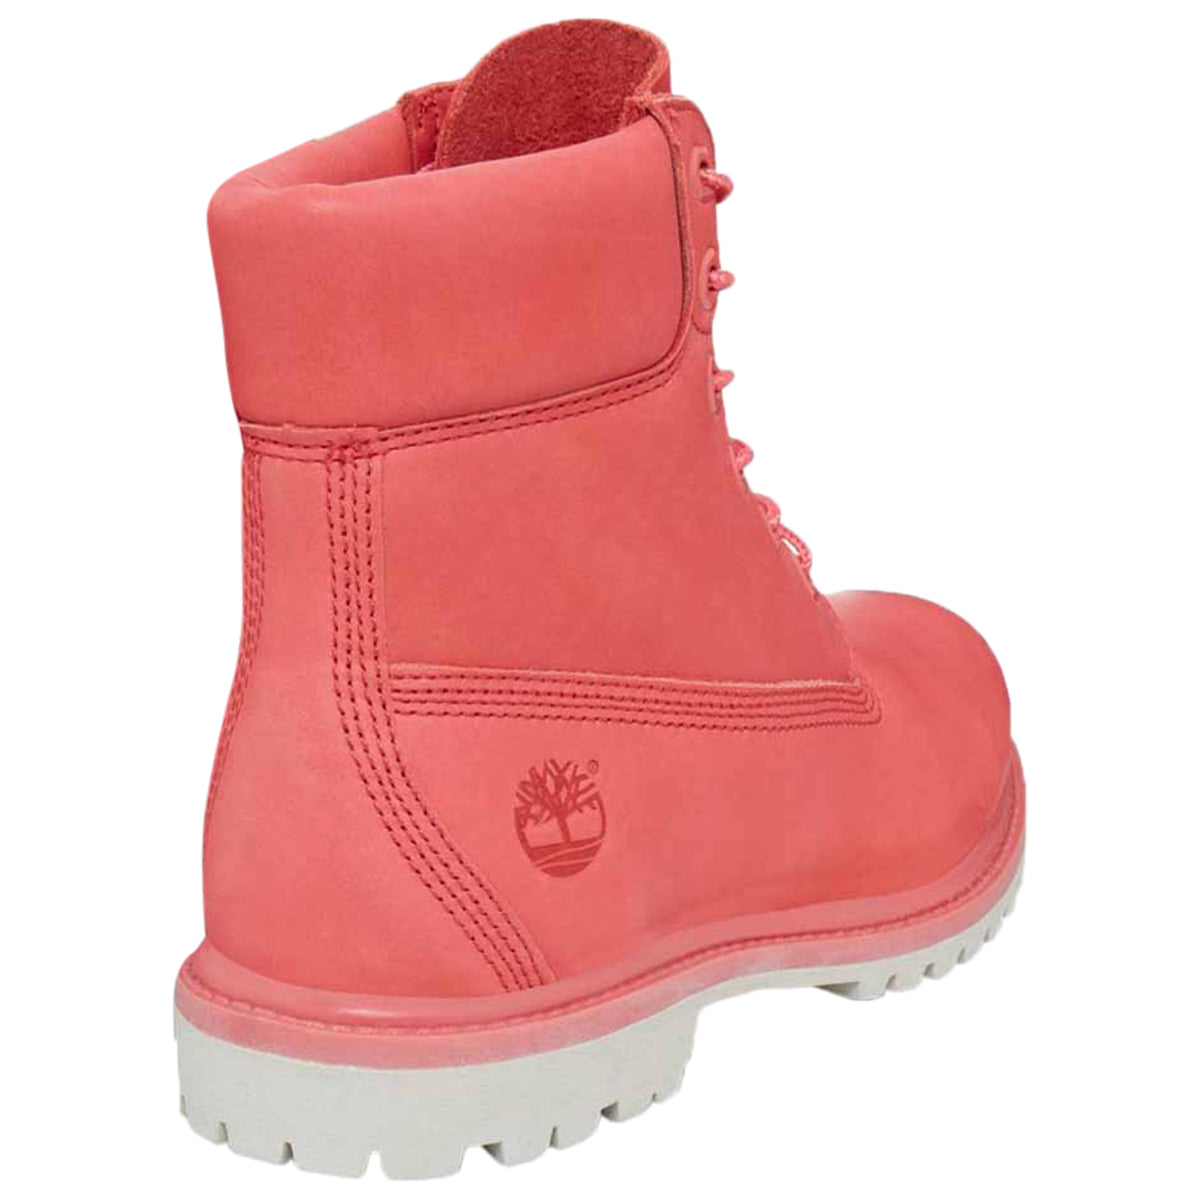 Timberland 6' Premium Boot Womens Style : Tb0a1aqk